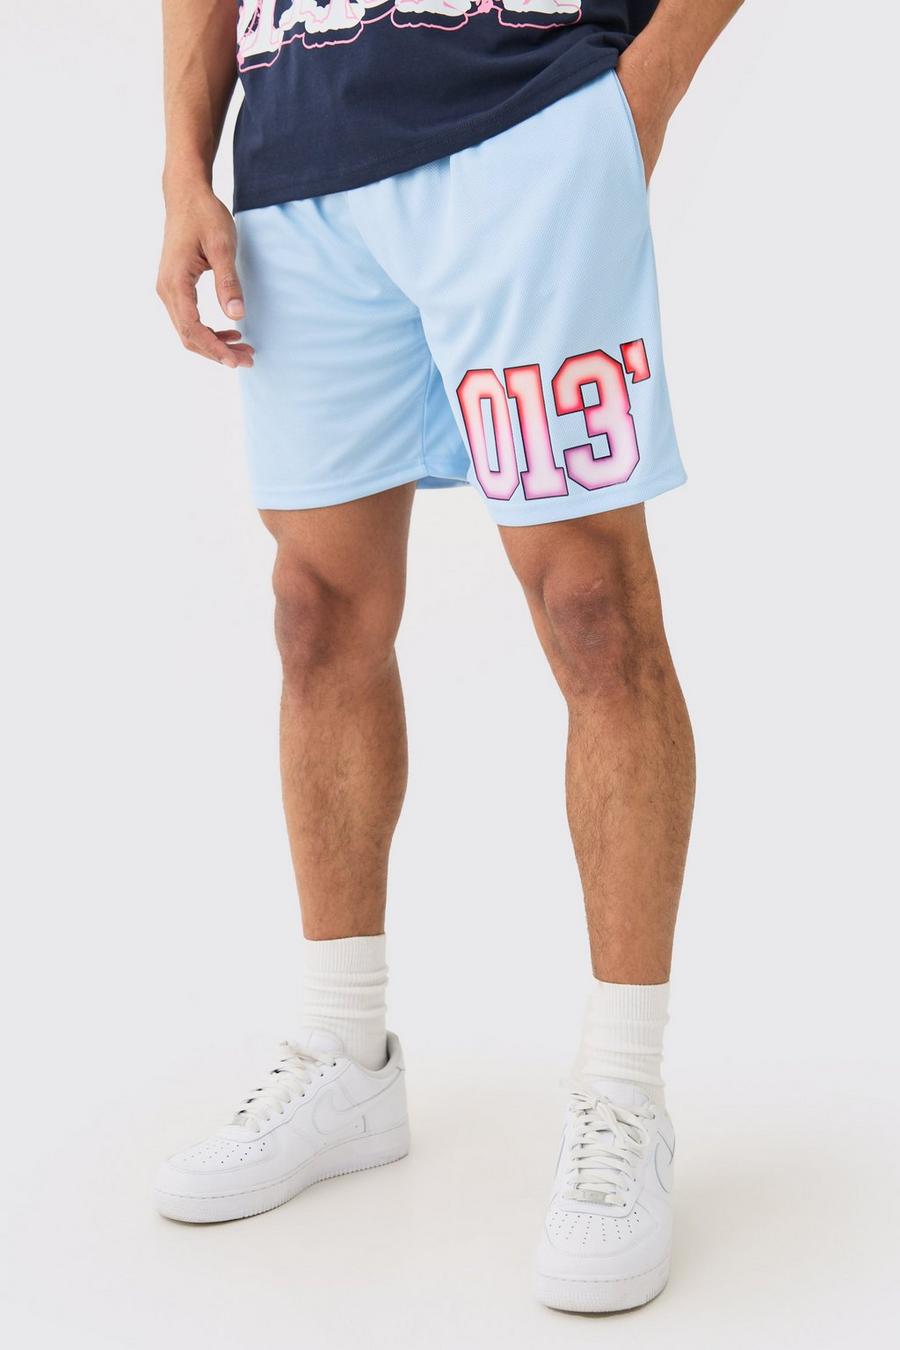 Aqua Mesh Printed Side Basketball Short